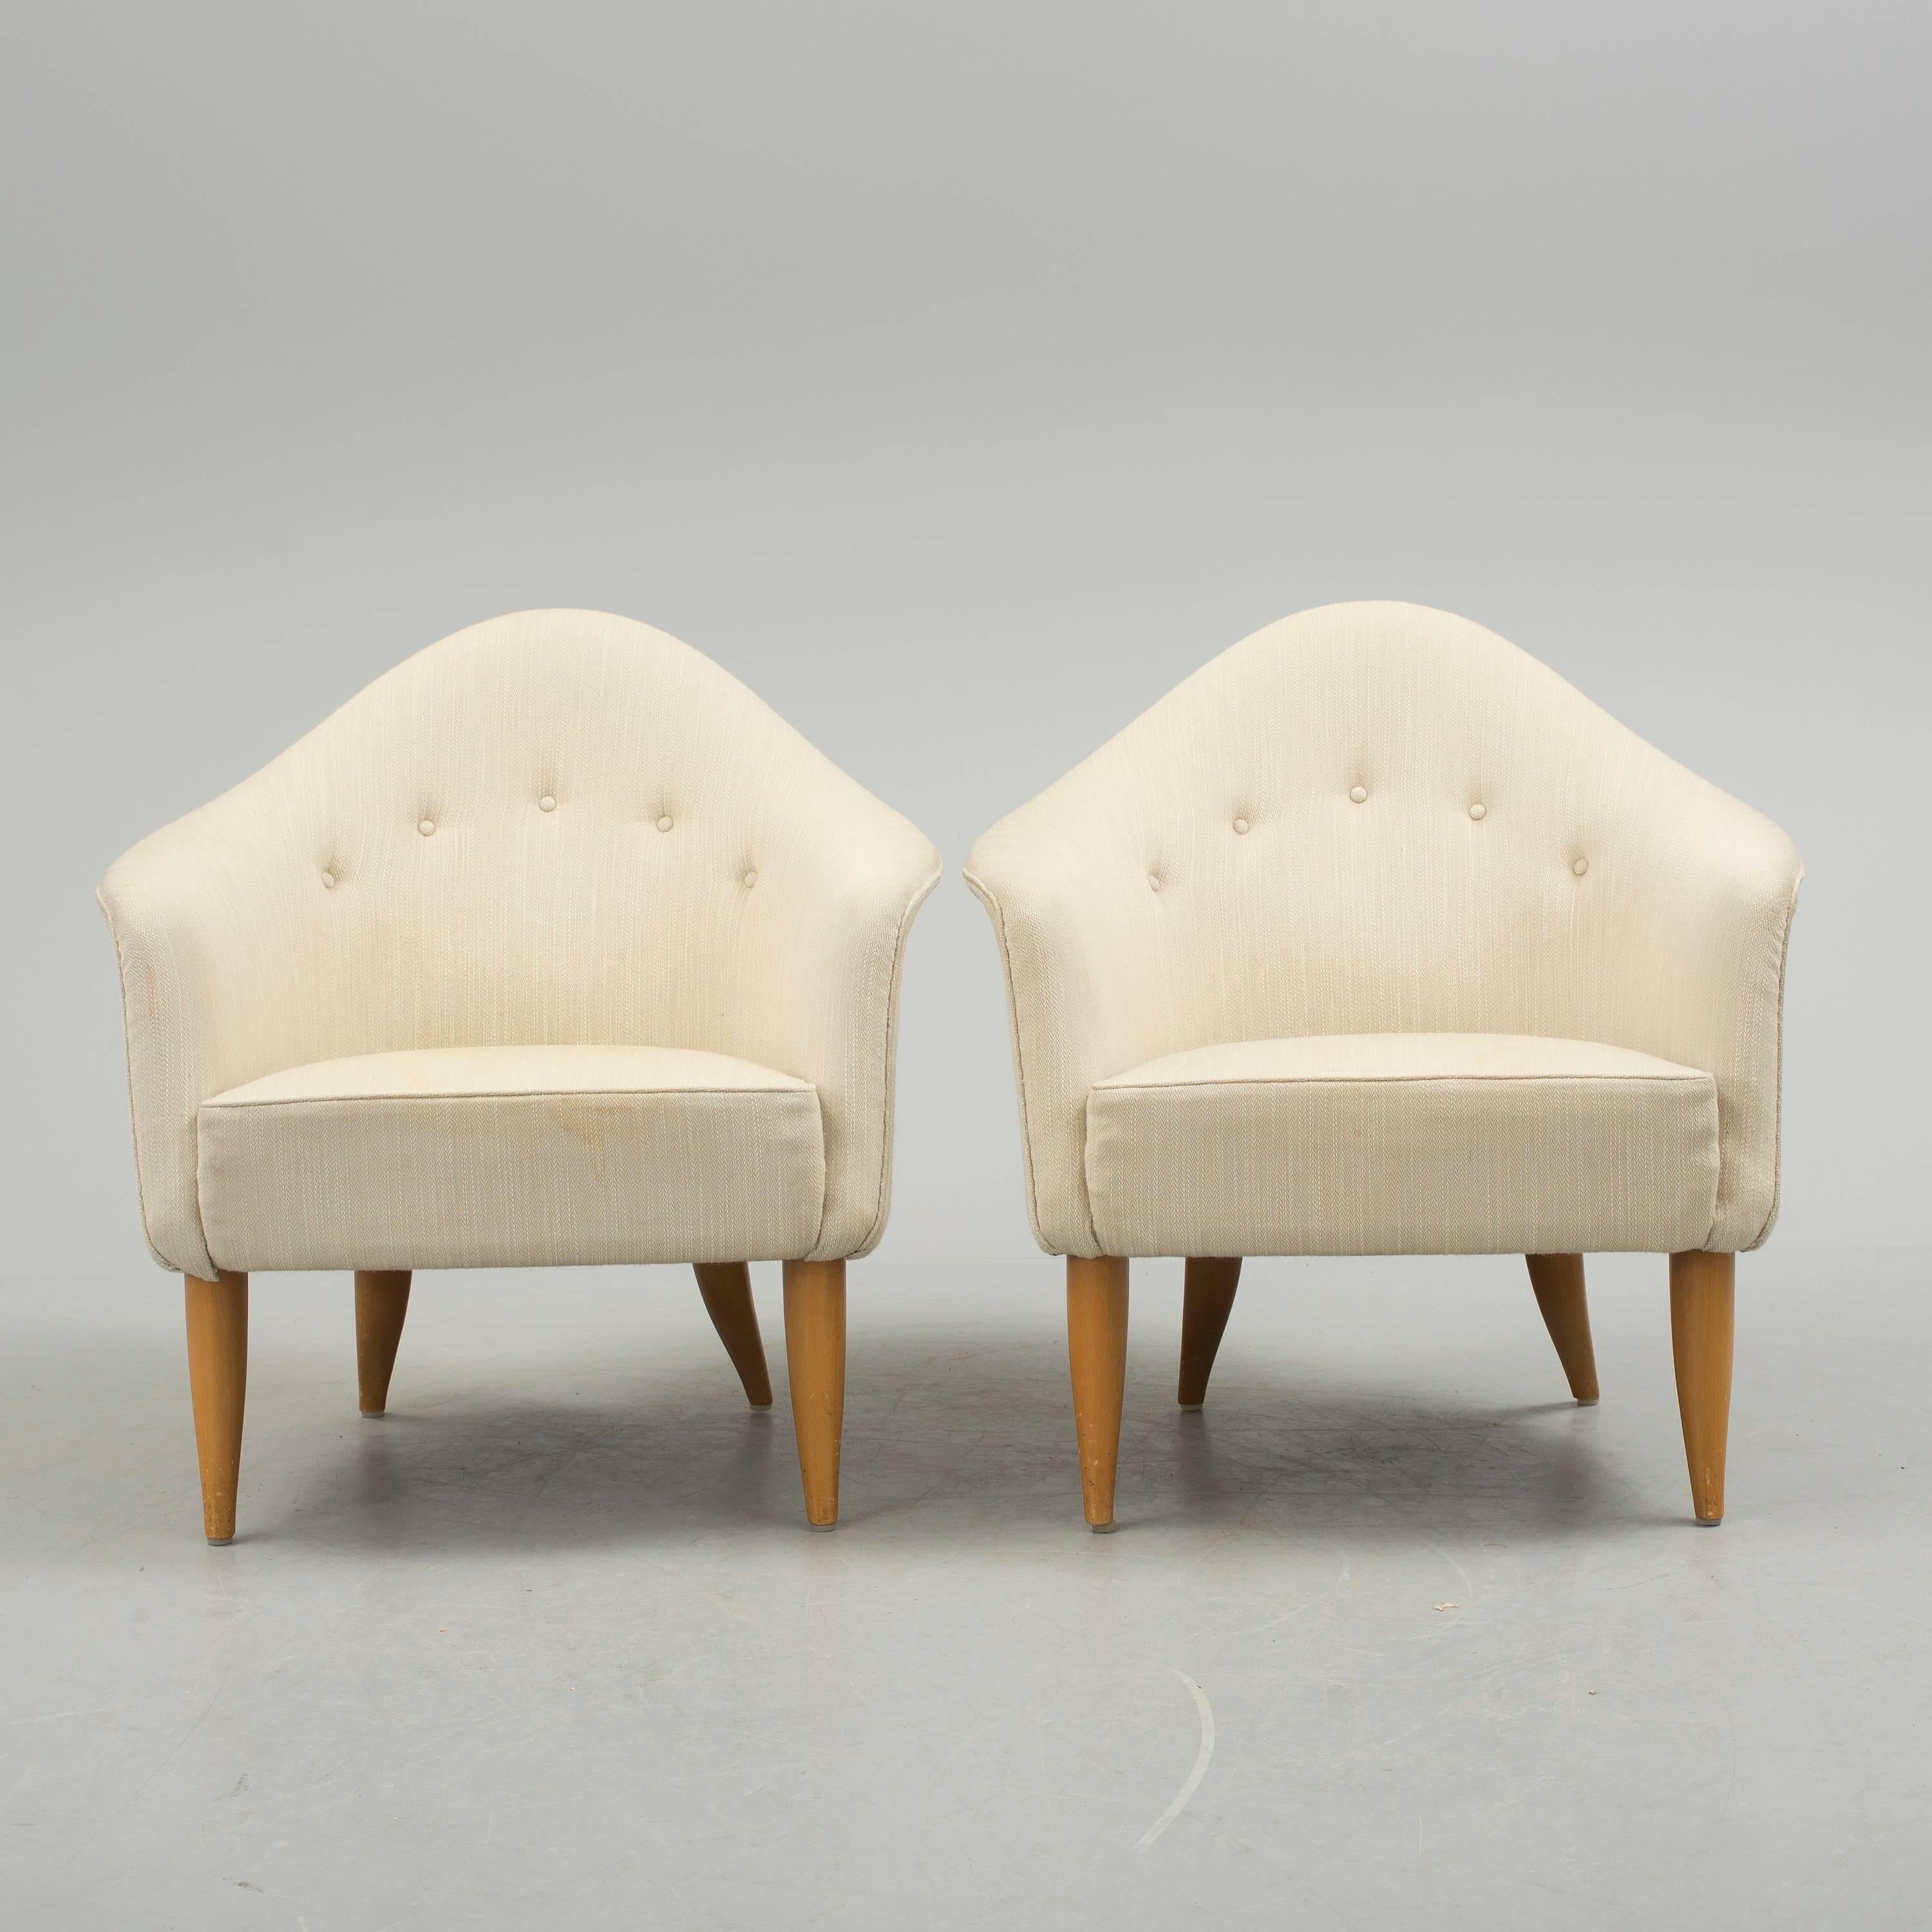 Pair of 'Little Adam' lounge chairs designed by n for Nordiska Kompaniet, in Sweden 1958. Original white wool upholstered.